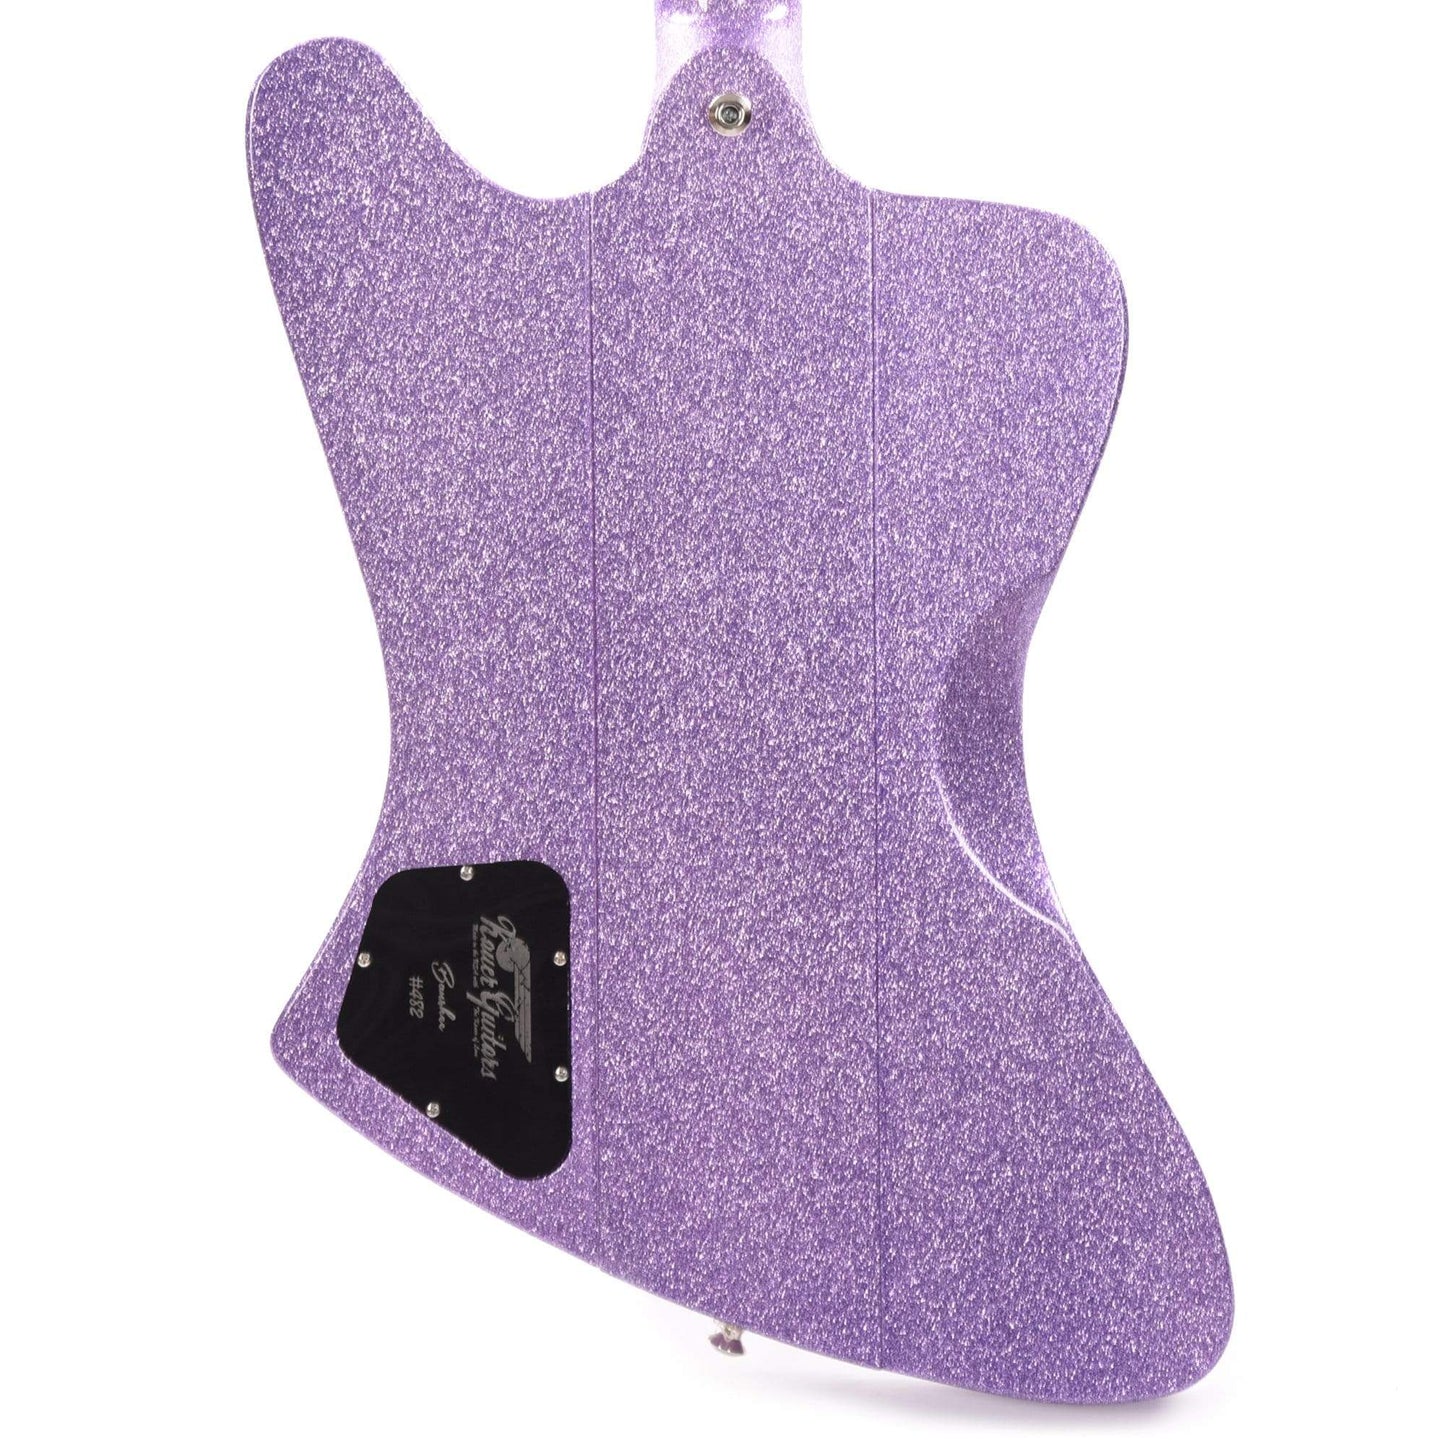 Kauer Banshee Standard Amethyst Purple Flake w/Lollar P90s Electric Guitars / Solid Body